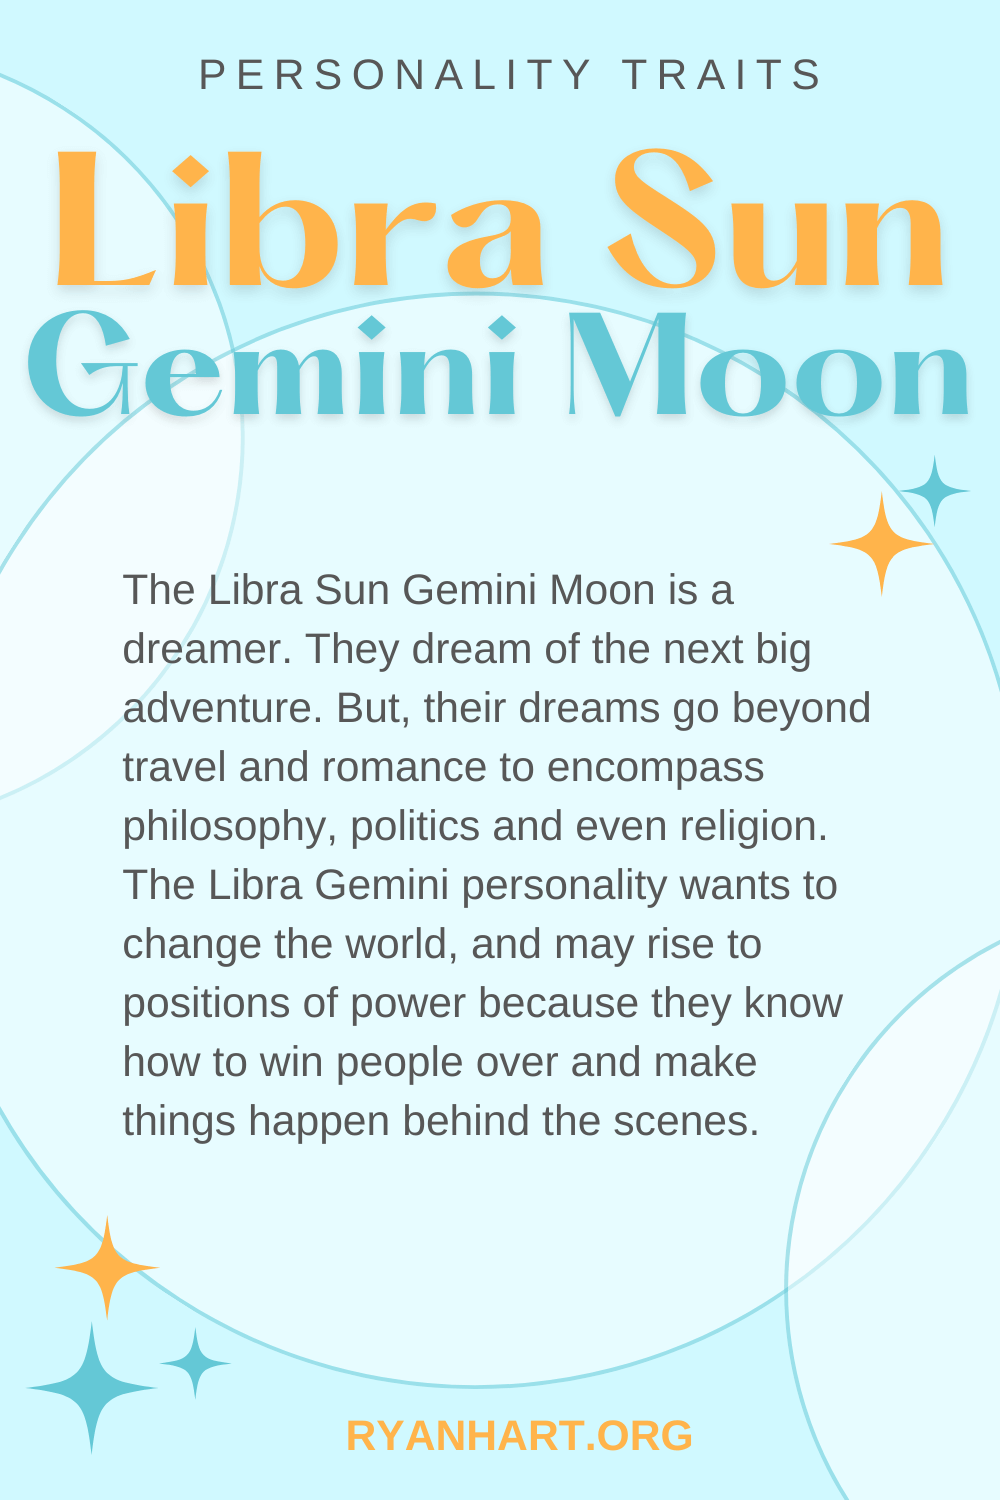 Libra Sun Gemini Moon Description